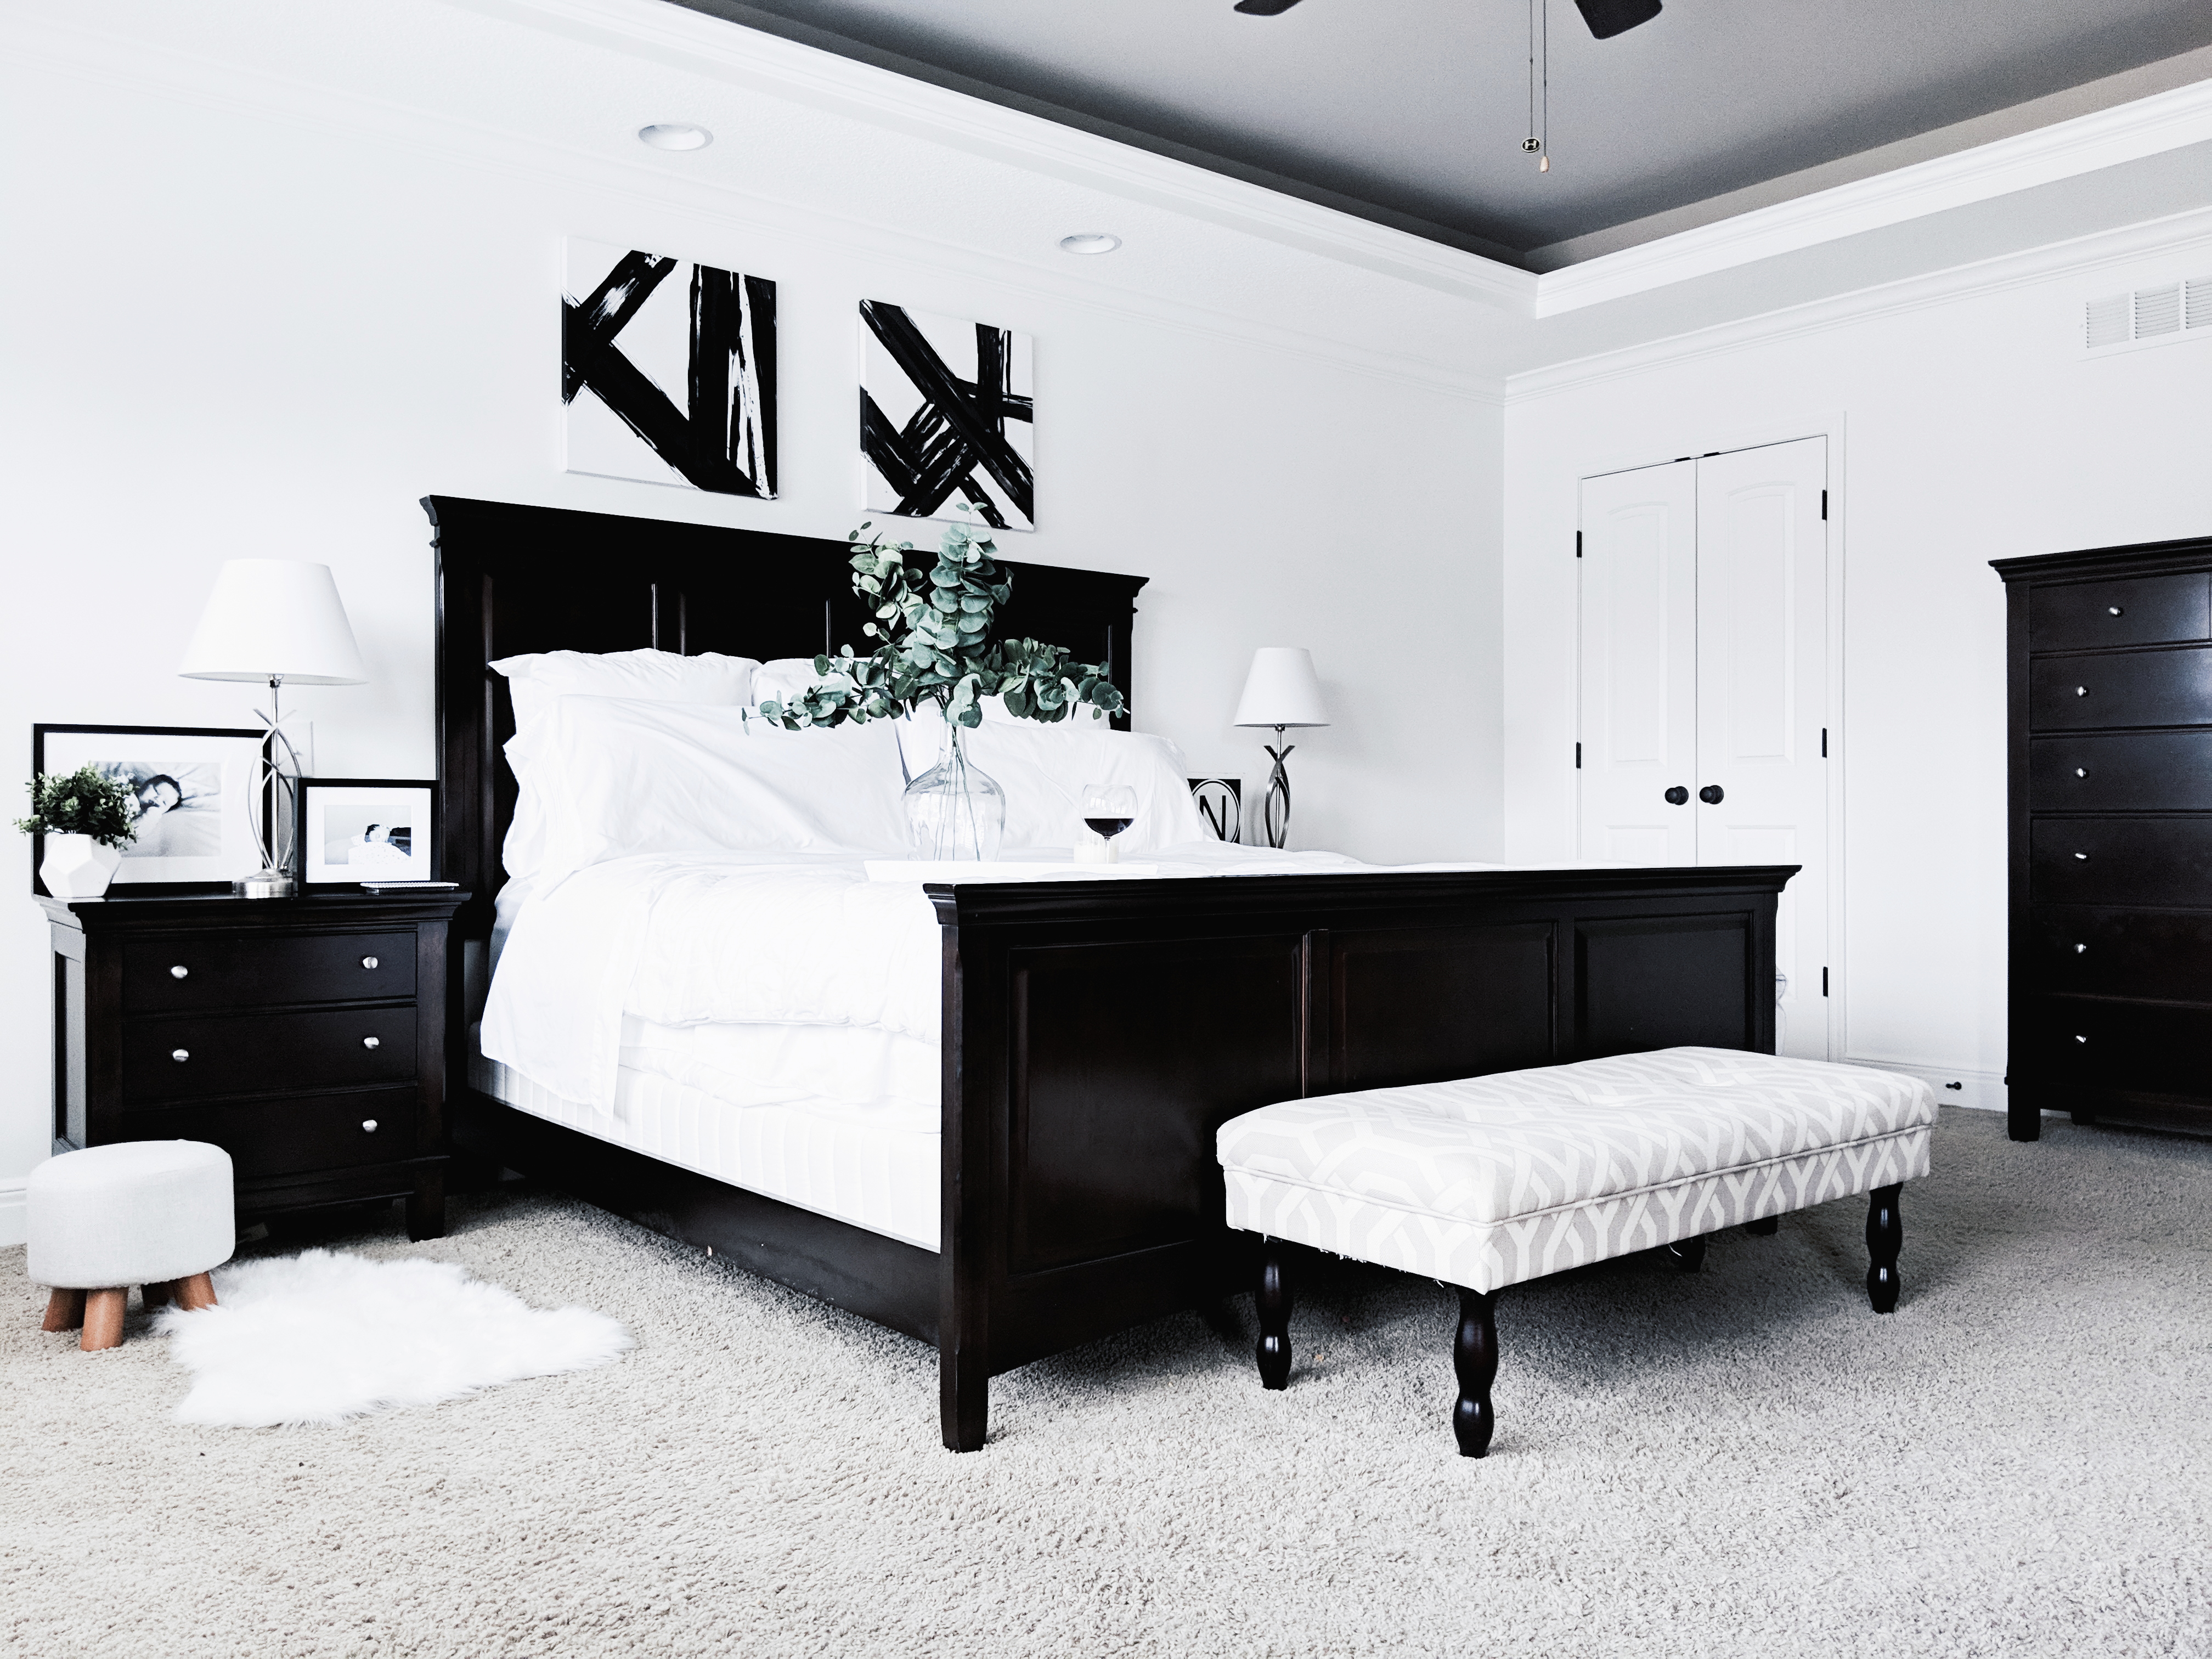 Black And White Bedroom Decor Ideas